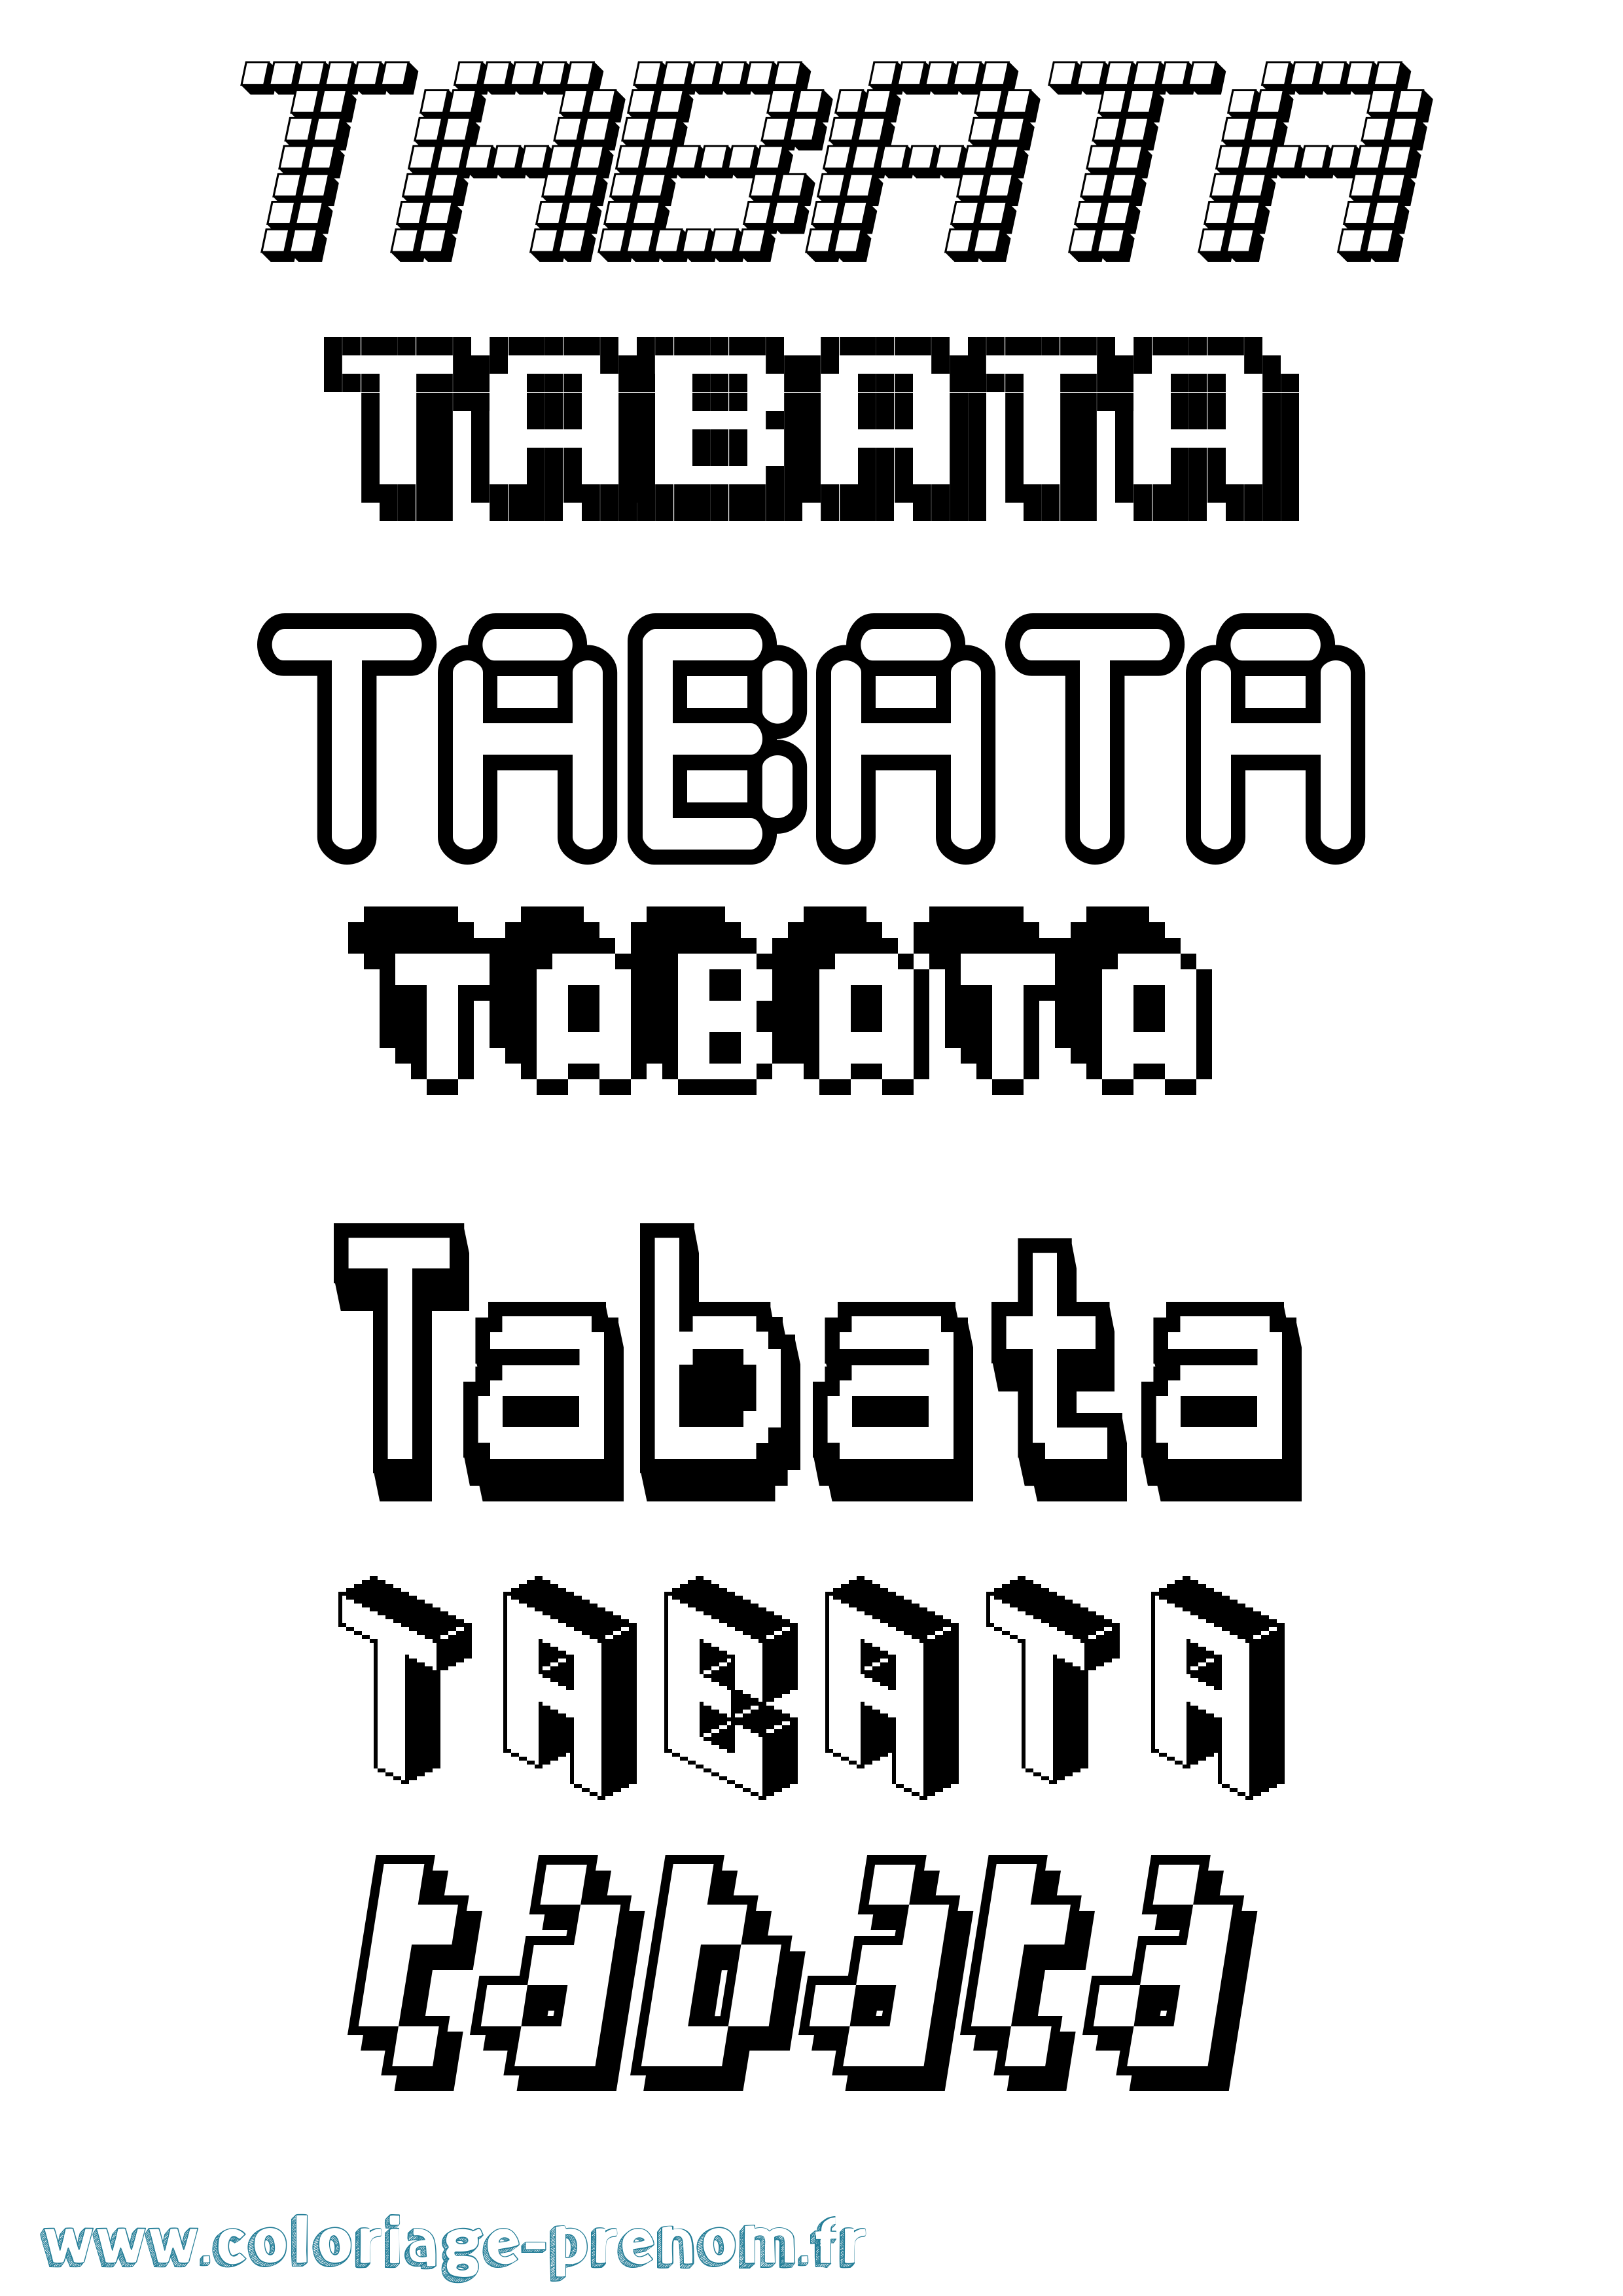 Coloriage prénom Tabata Pixel